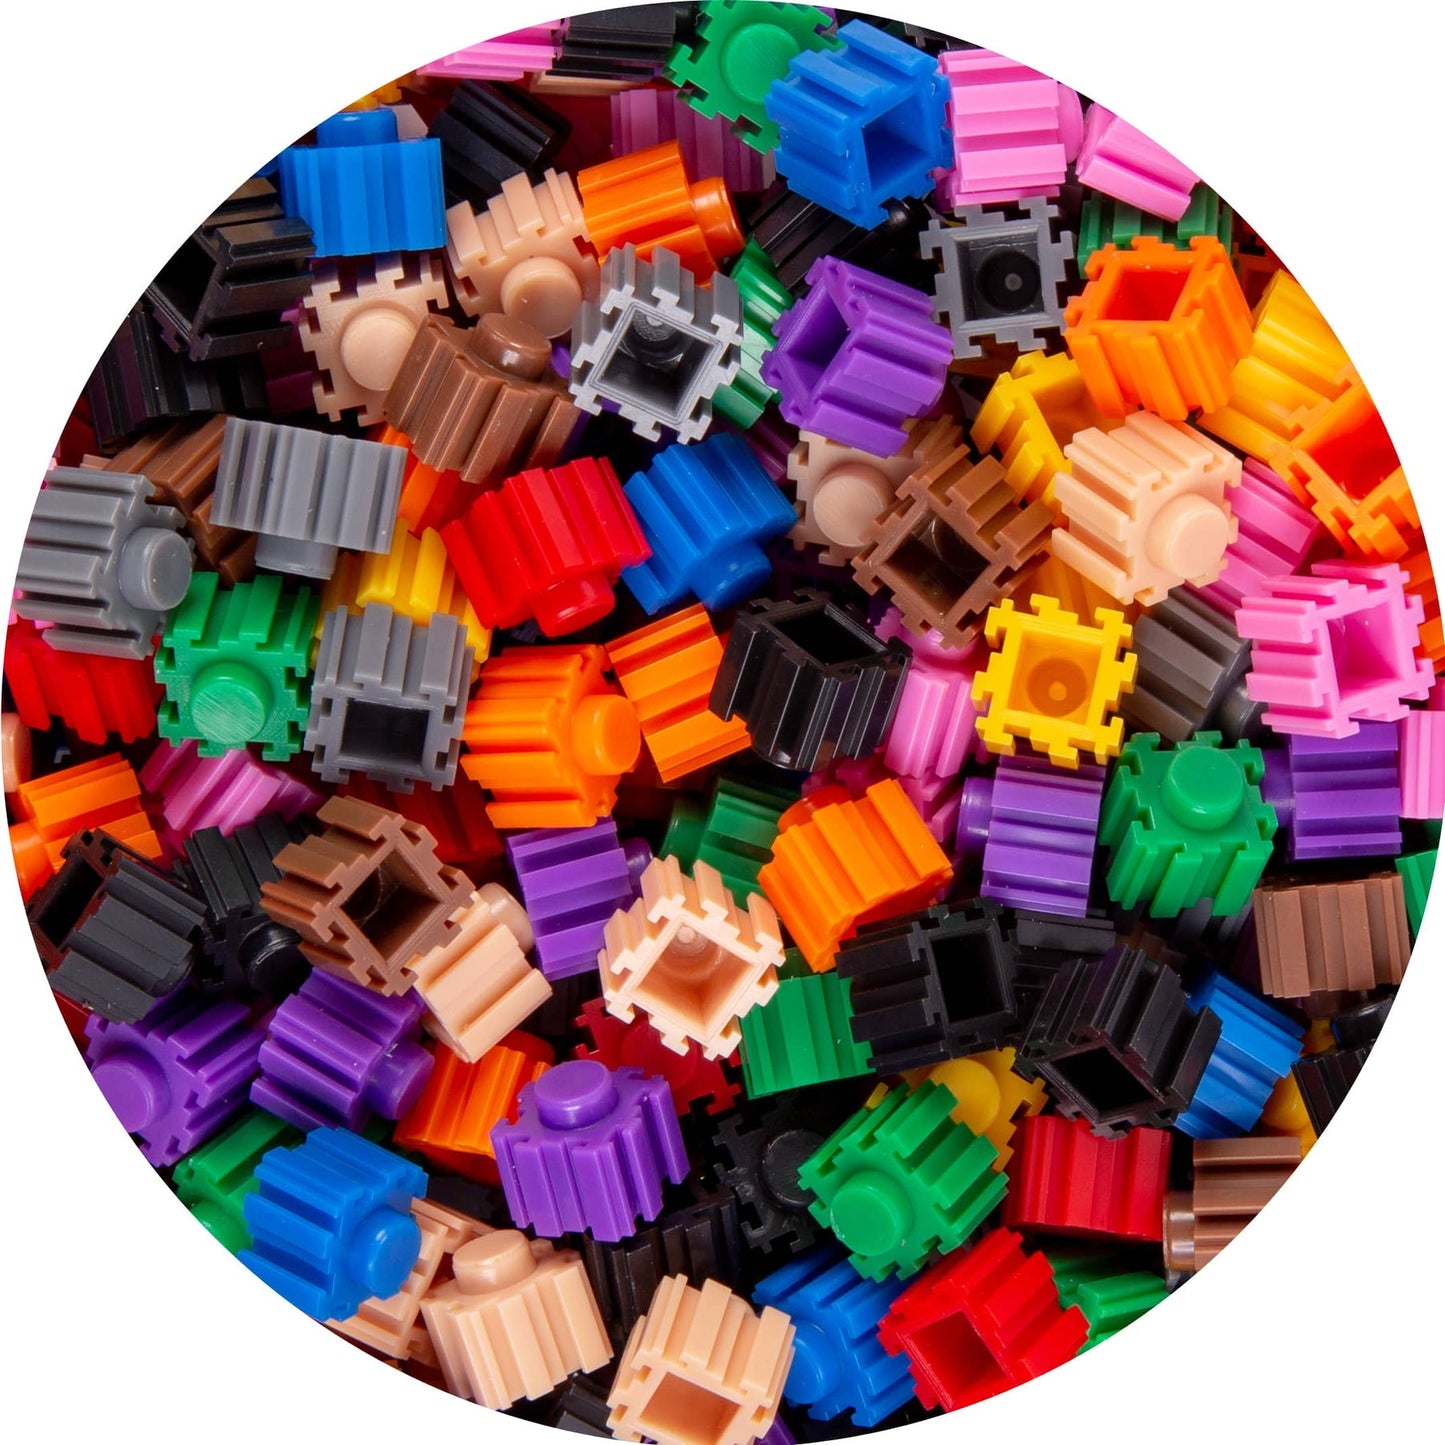 Pix Brix Pixel Art Puzzle Bricks, 1,500 piece Set